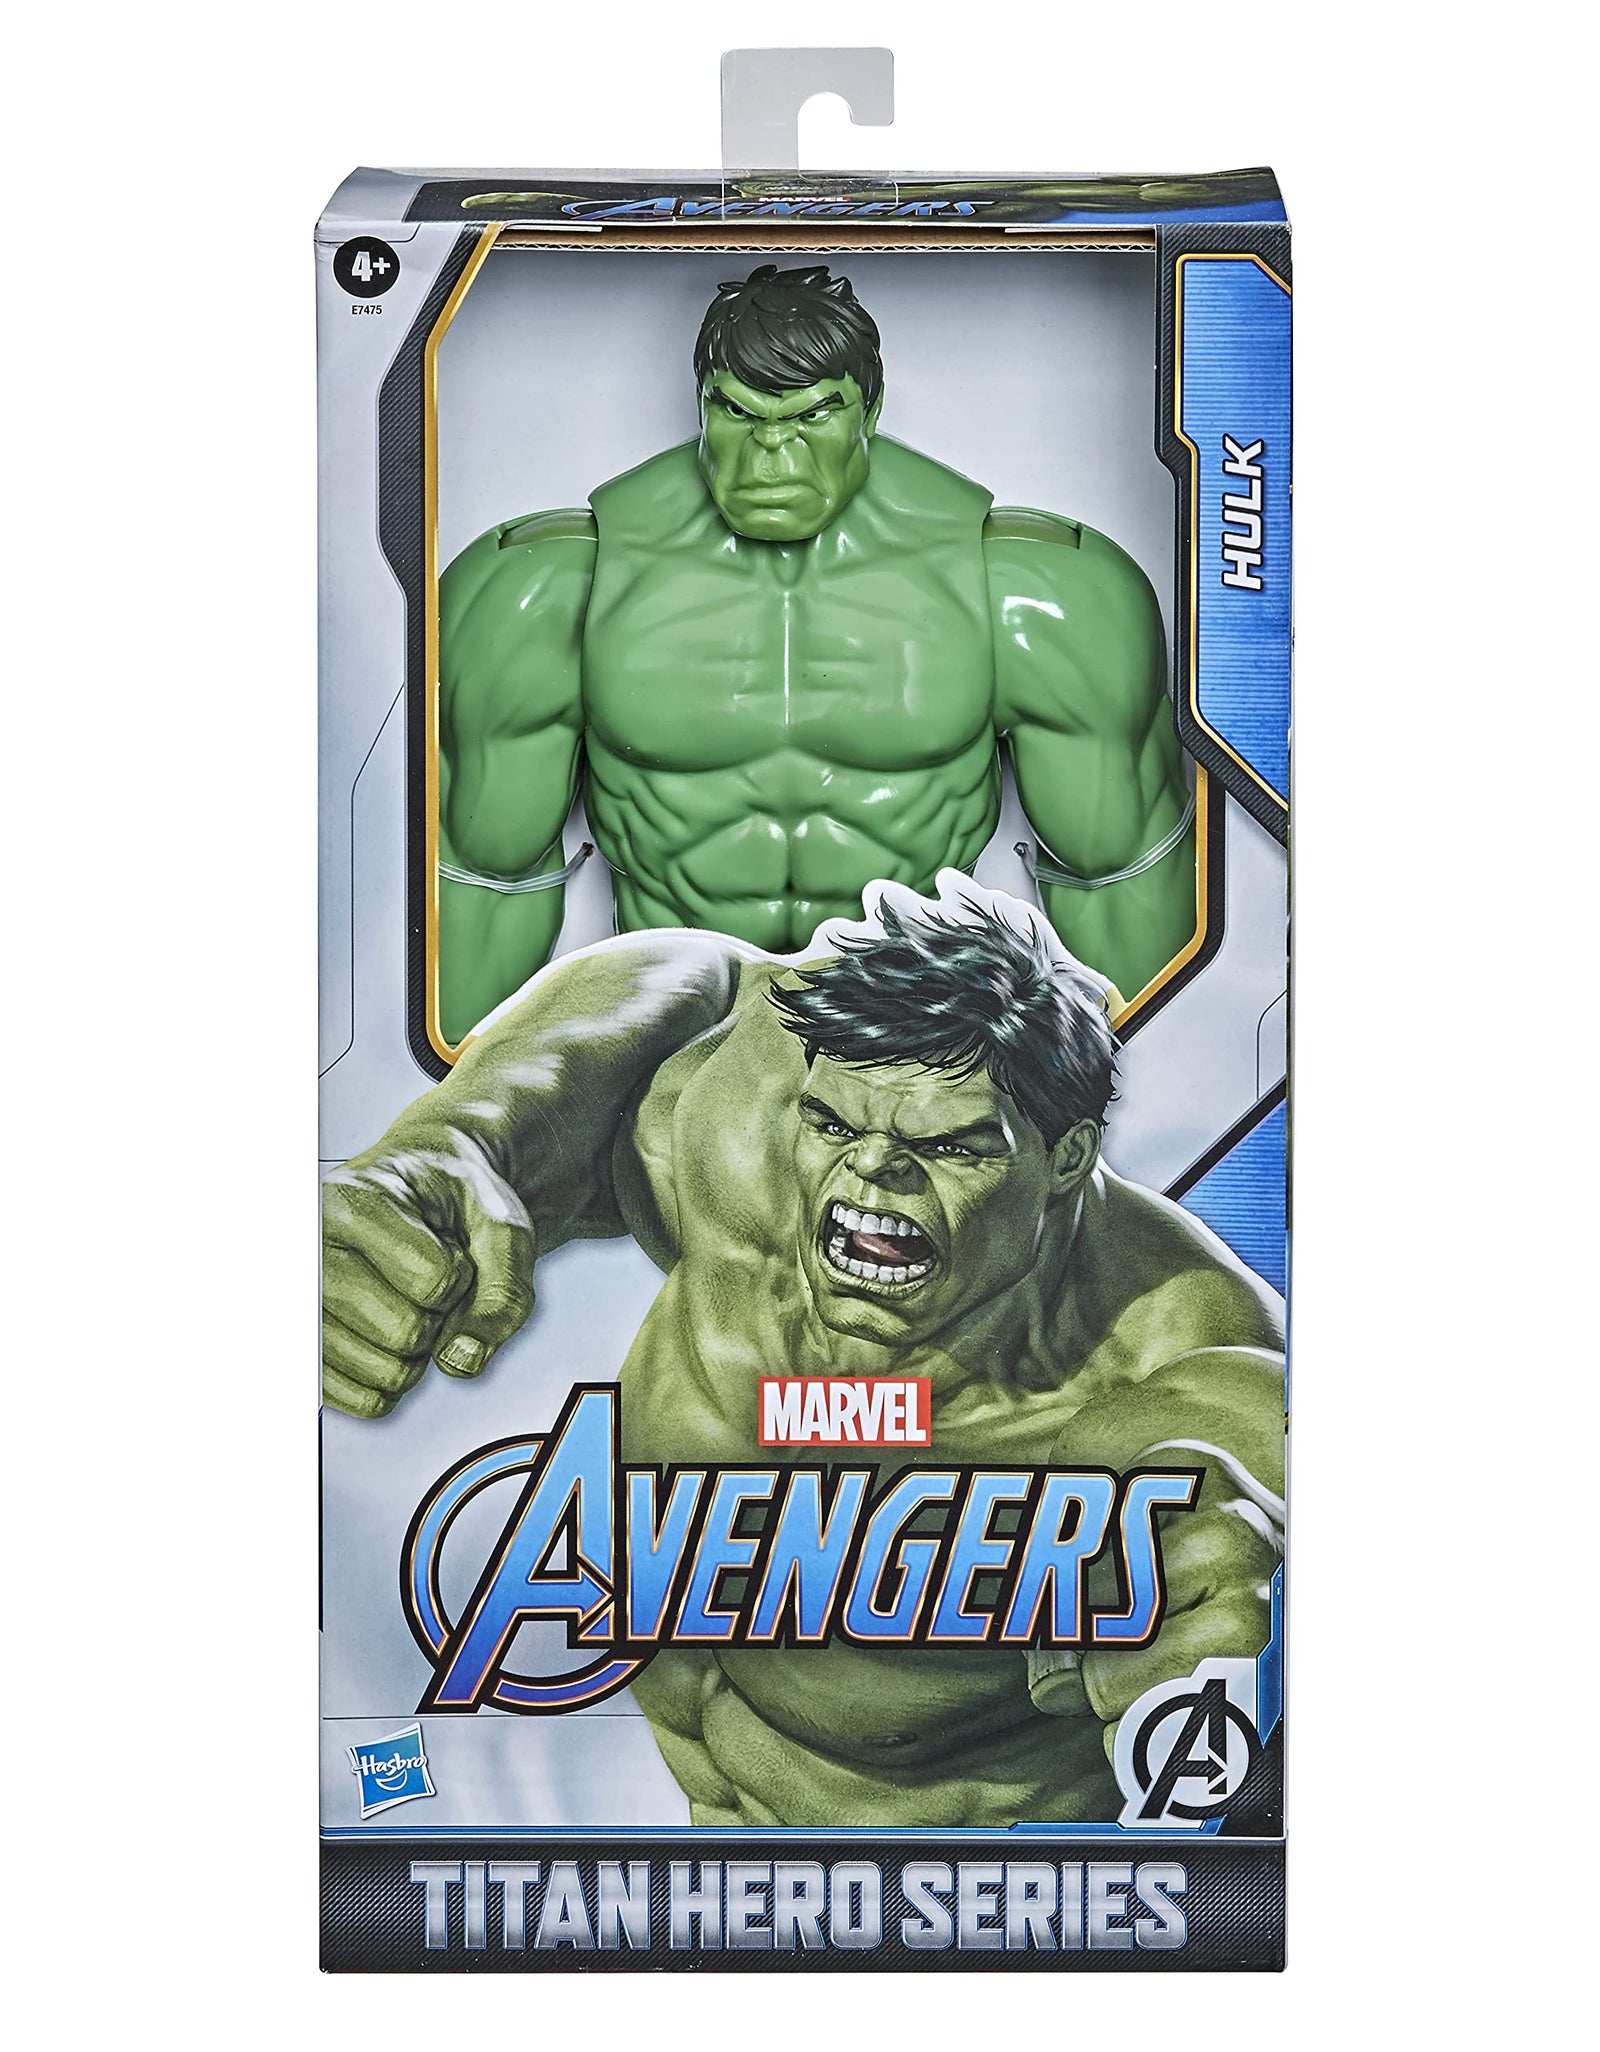 Marvel Avengers Titan Hero Series Blast Gear Deluxe Hulk Action Figure, 30-cm Toy, Inspired byMarvel Comics, for Children Aged 4 and Up